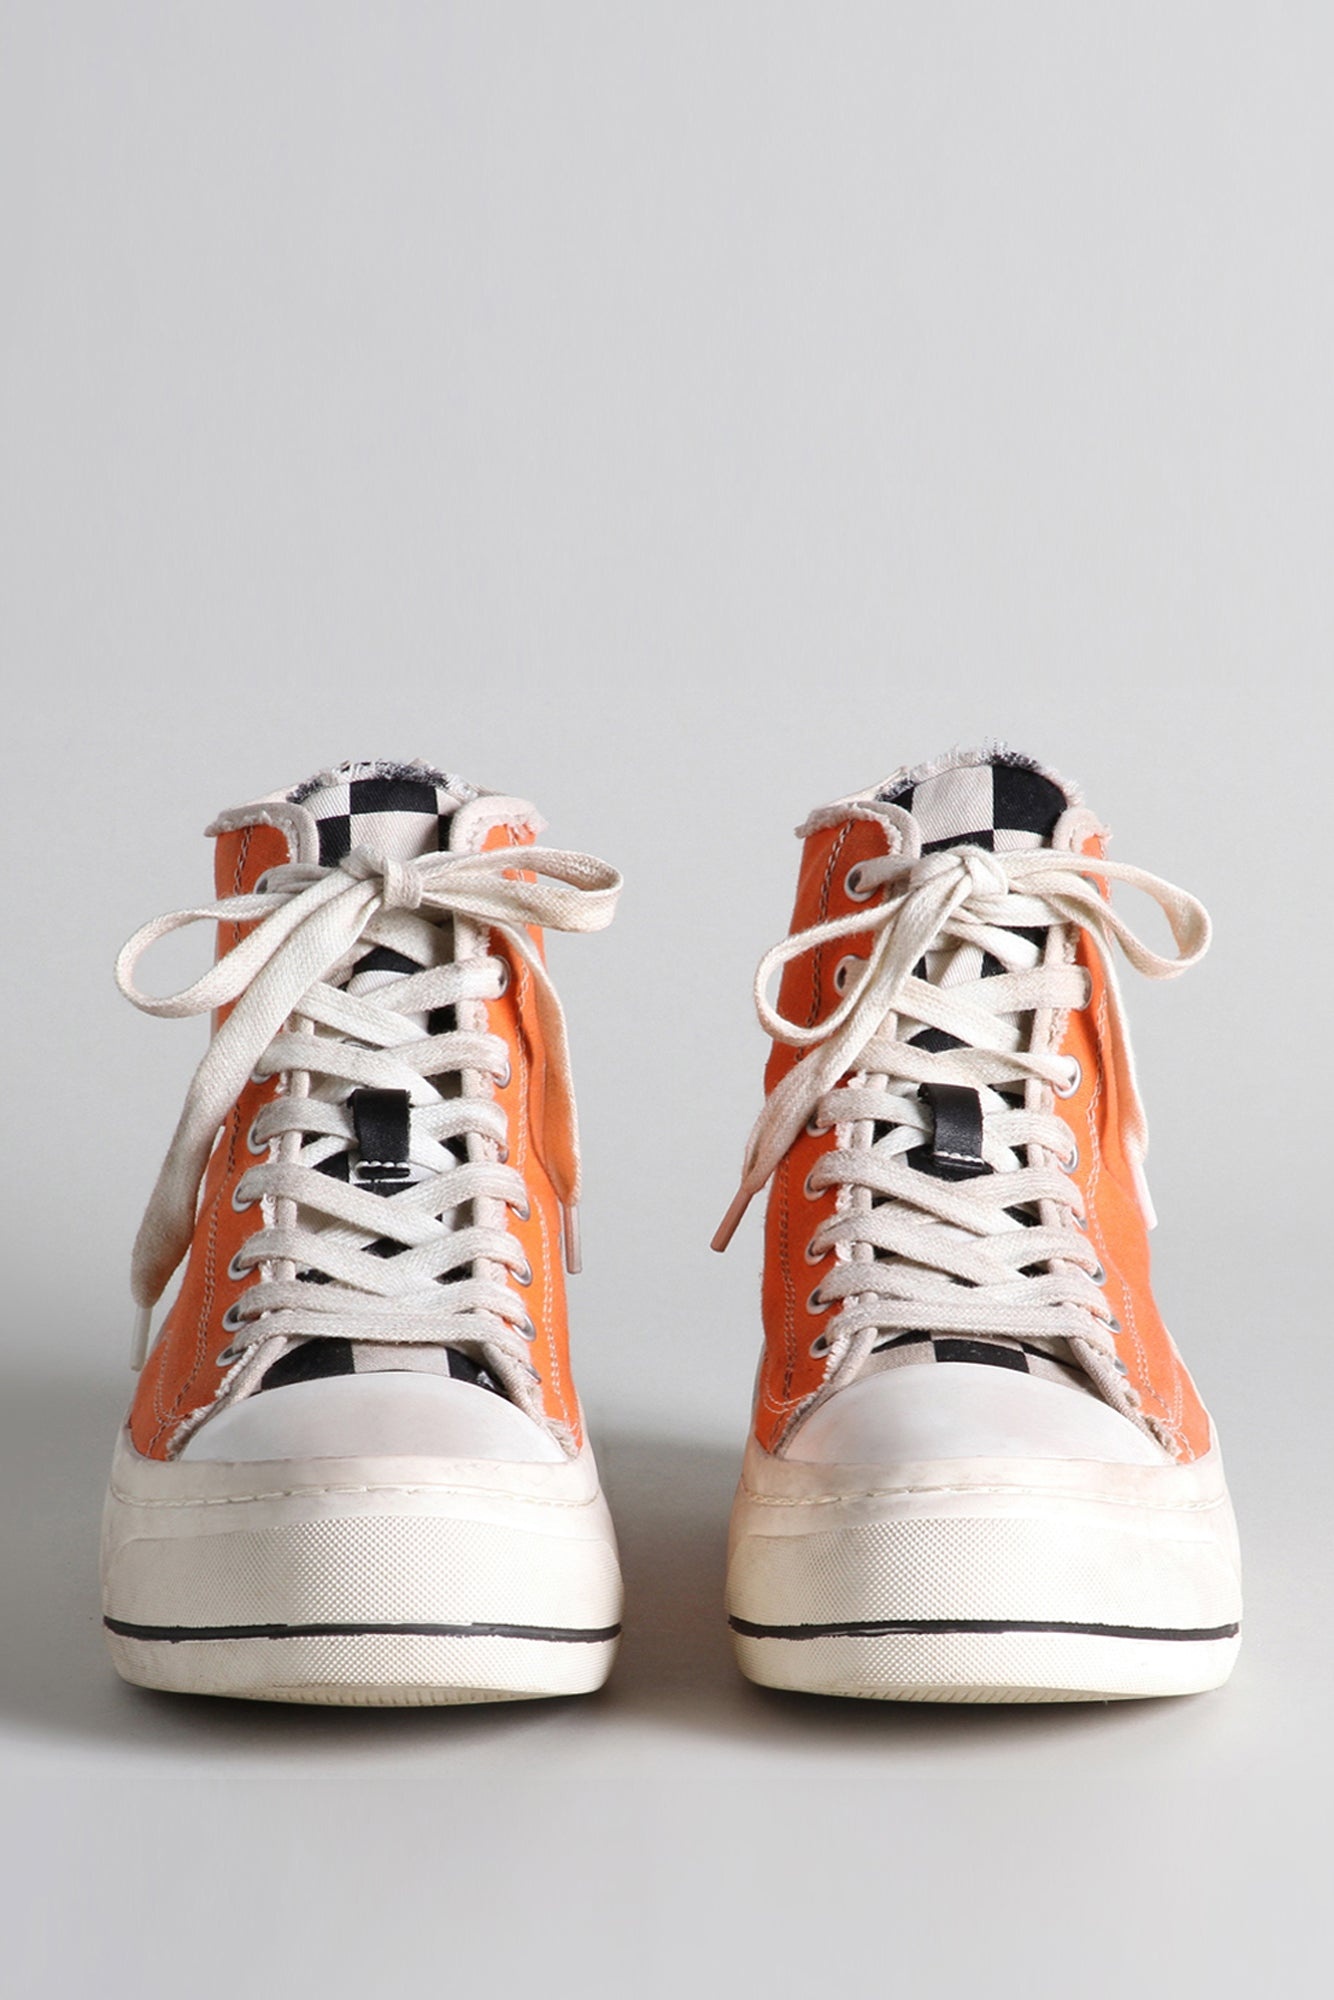 Kurt High Top Sneaker - Orange and Checker | R13 Denim Official Site - 2